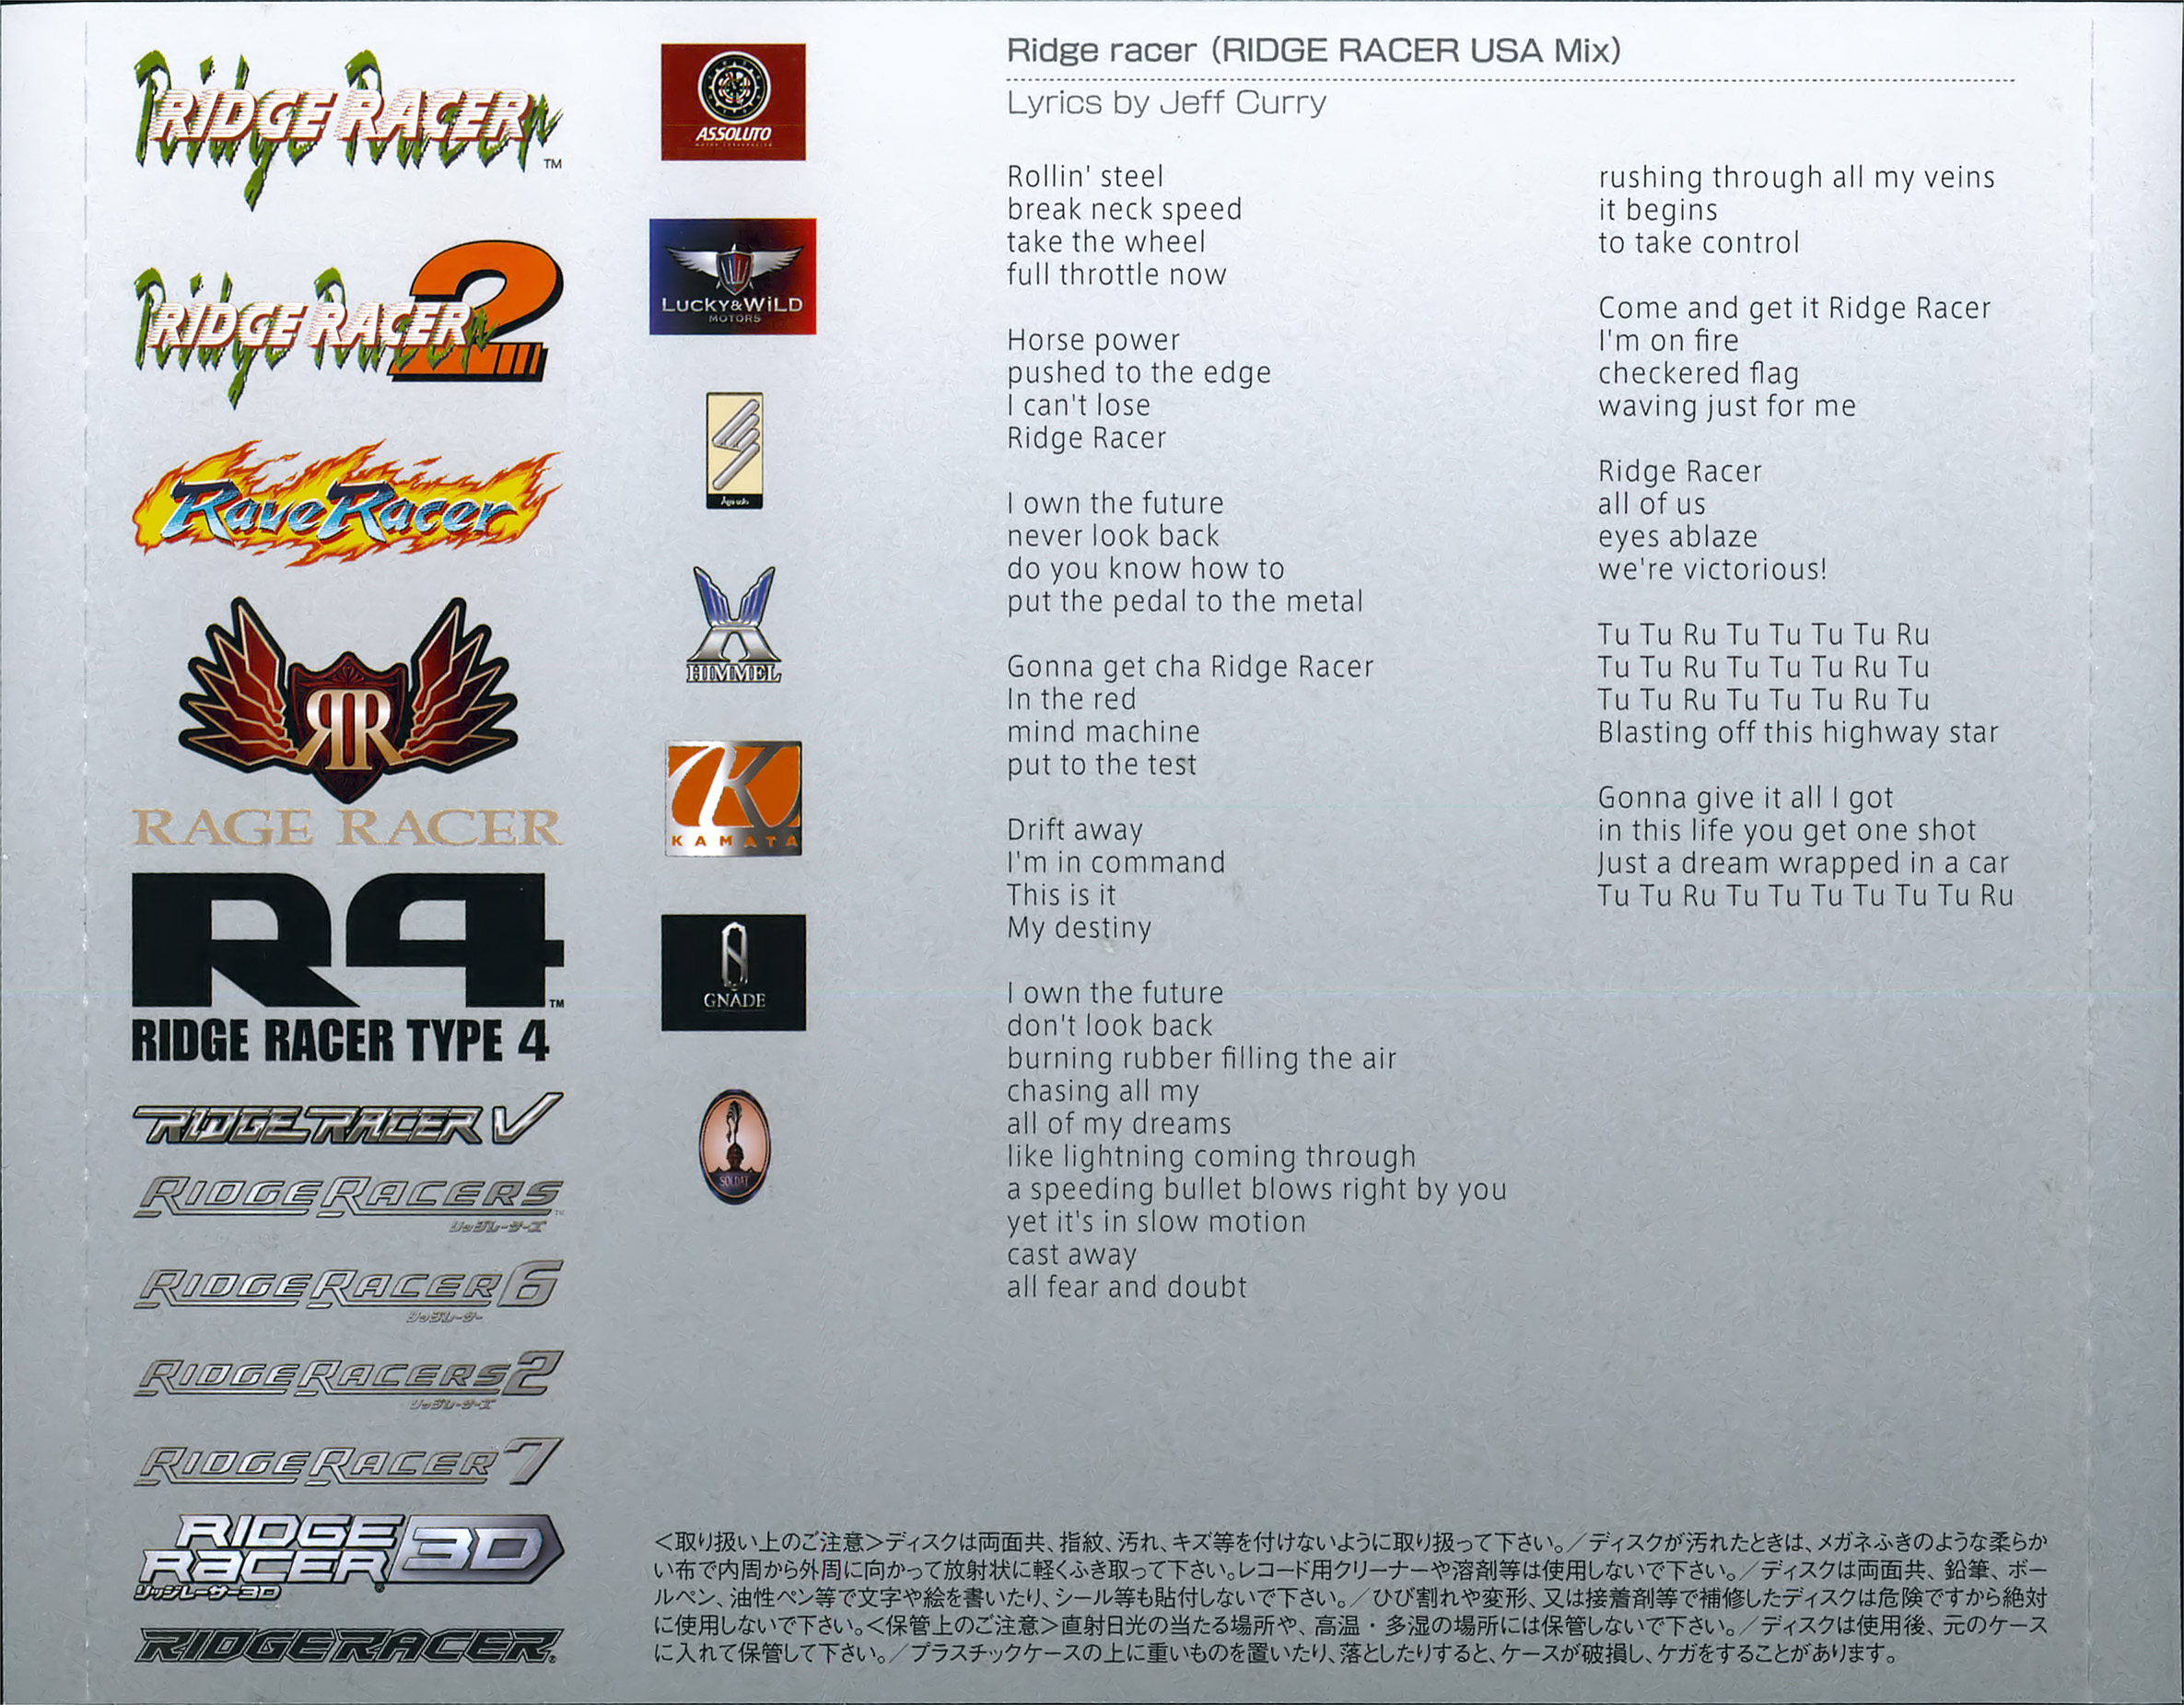 RIDGE RACER 20TH ANNIVERSARY REMIX + Extra Disc (2014) MP3 - Download RIDGE  RACER 20TH ANNIVERSARY REMIX + Extra Disc (2014) Soundtracks for FREE!